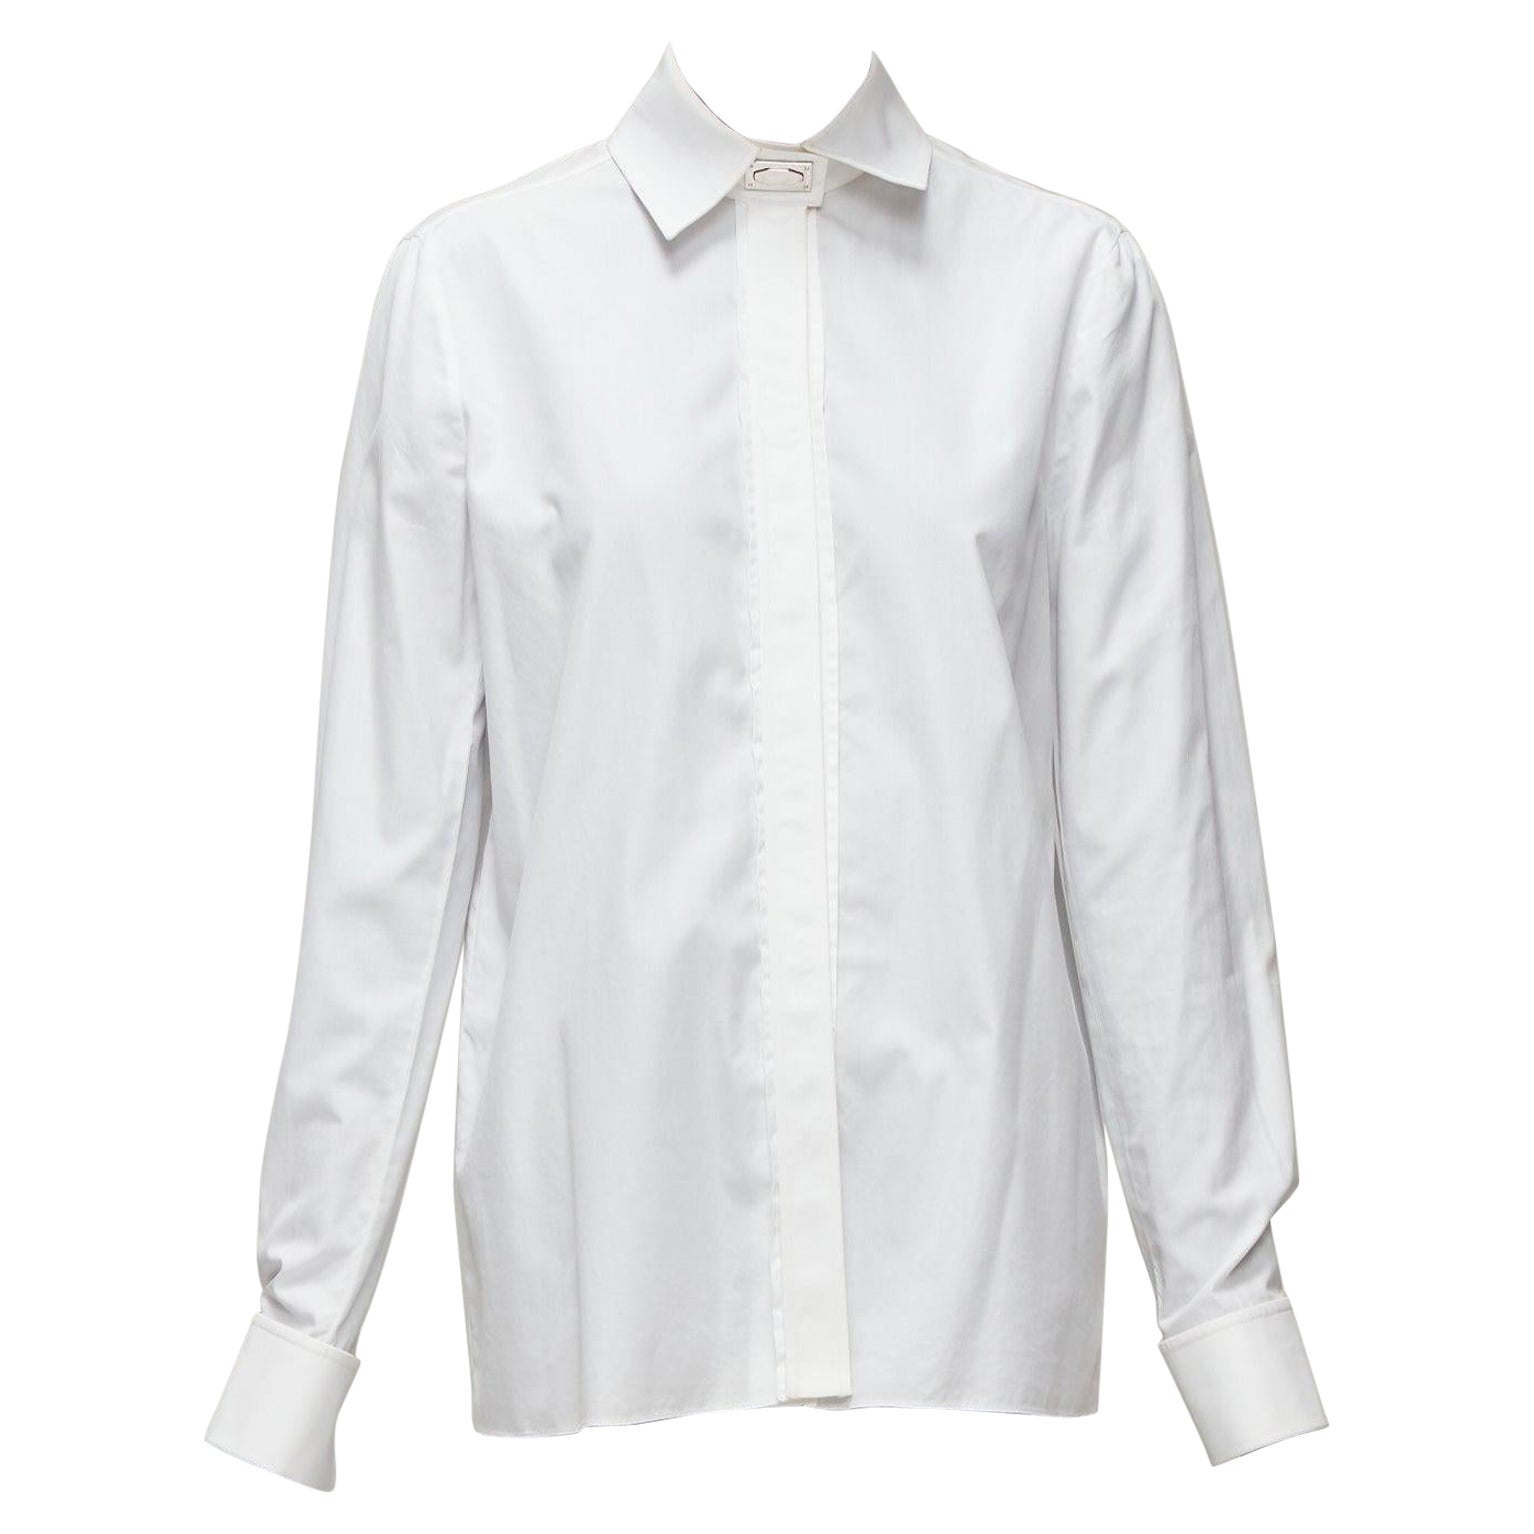 GIVENCHY Riccardo Tisci silver metal button collar white cotton shirt FR40 L For Sale